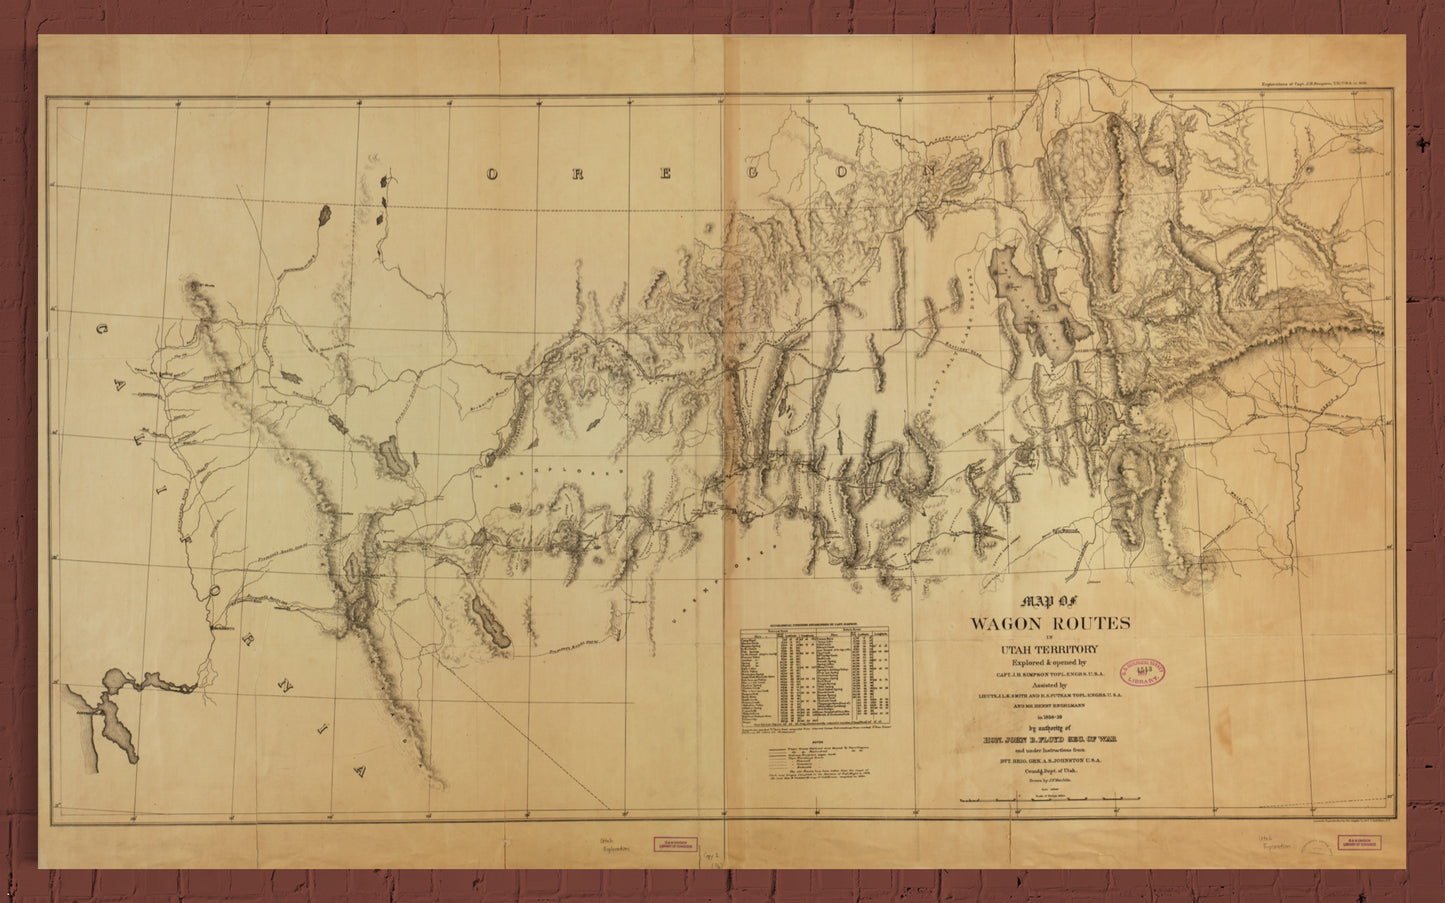 1859 Map of Wagon Routes in Utah Territory